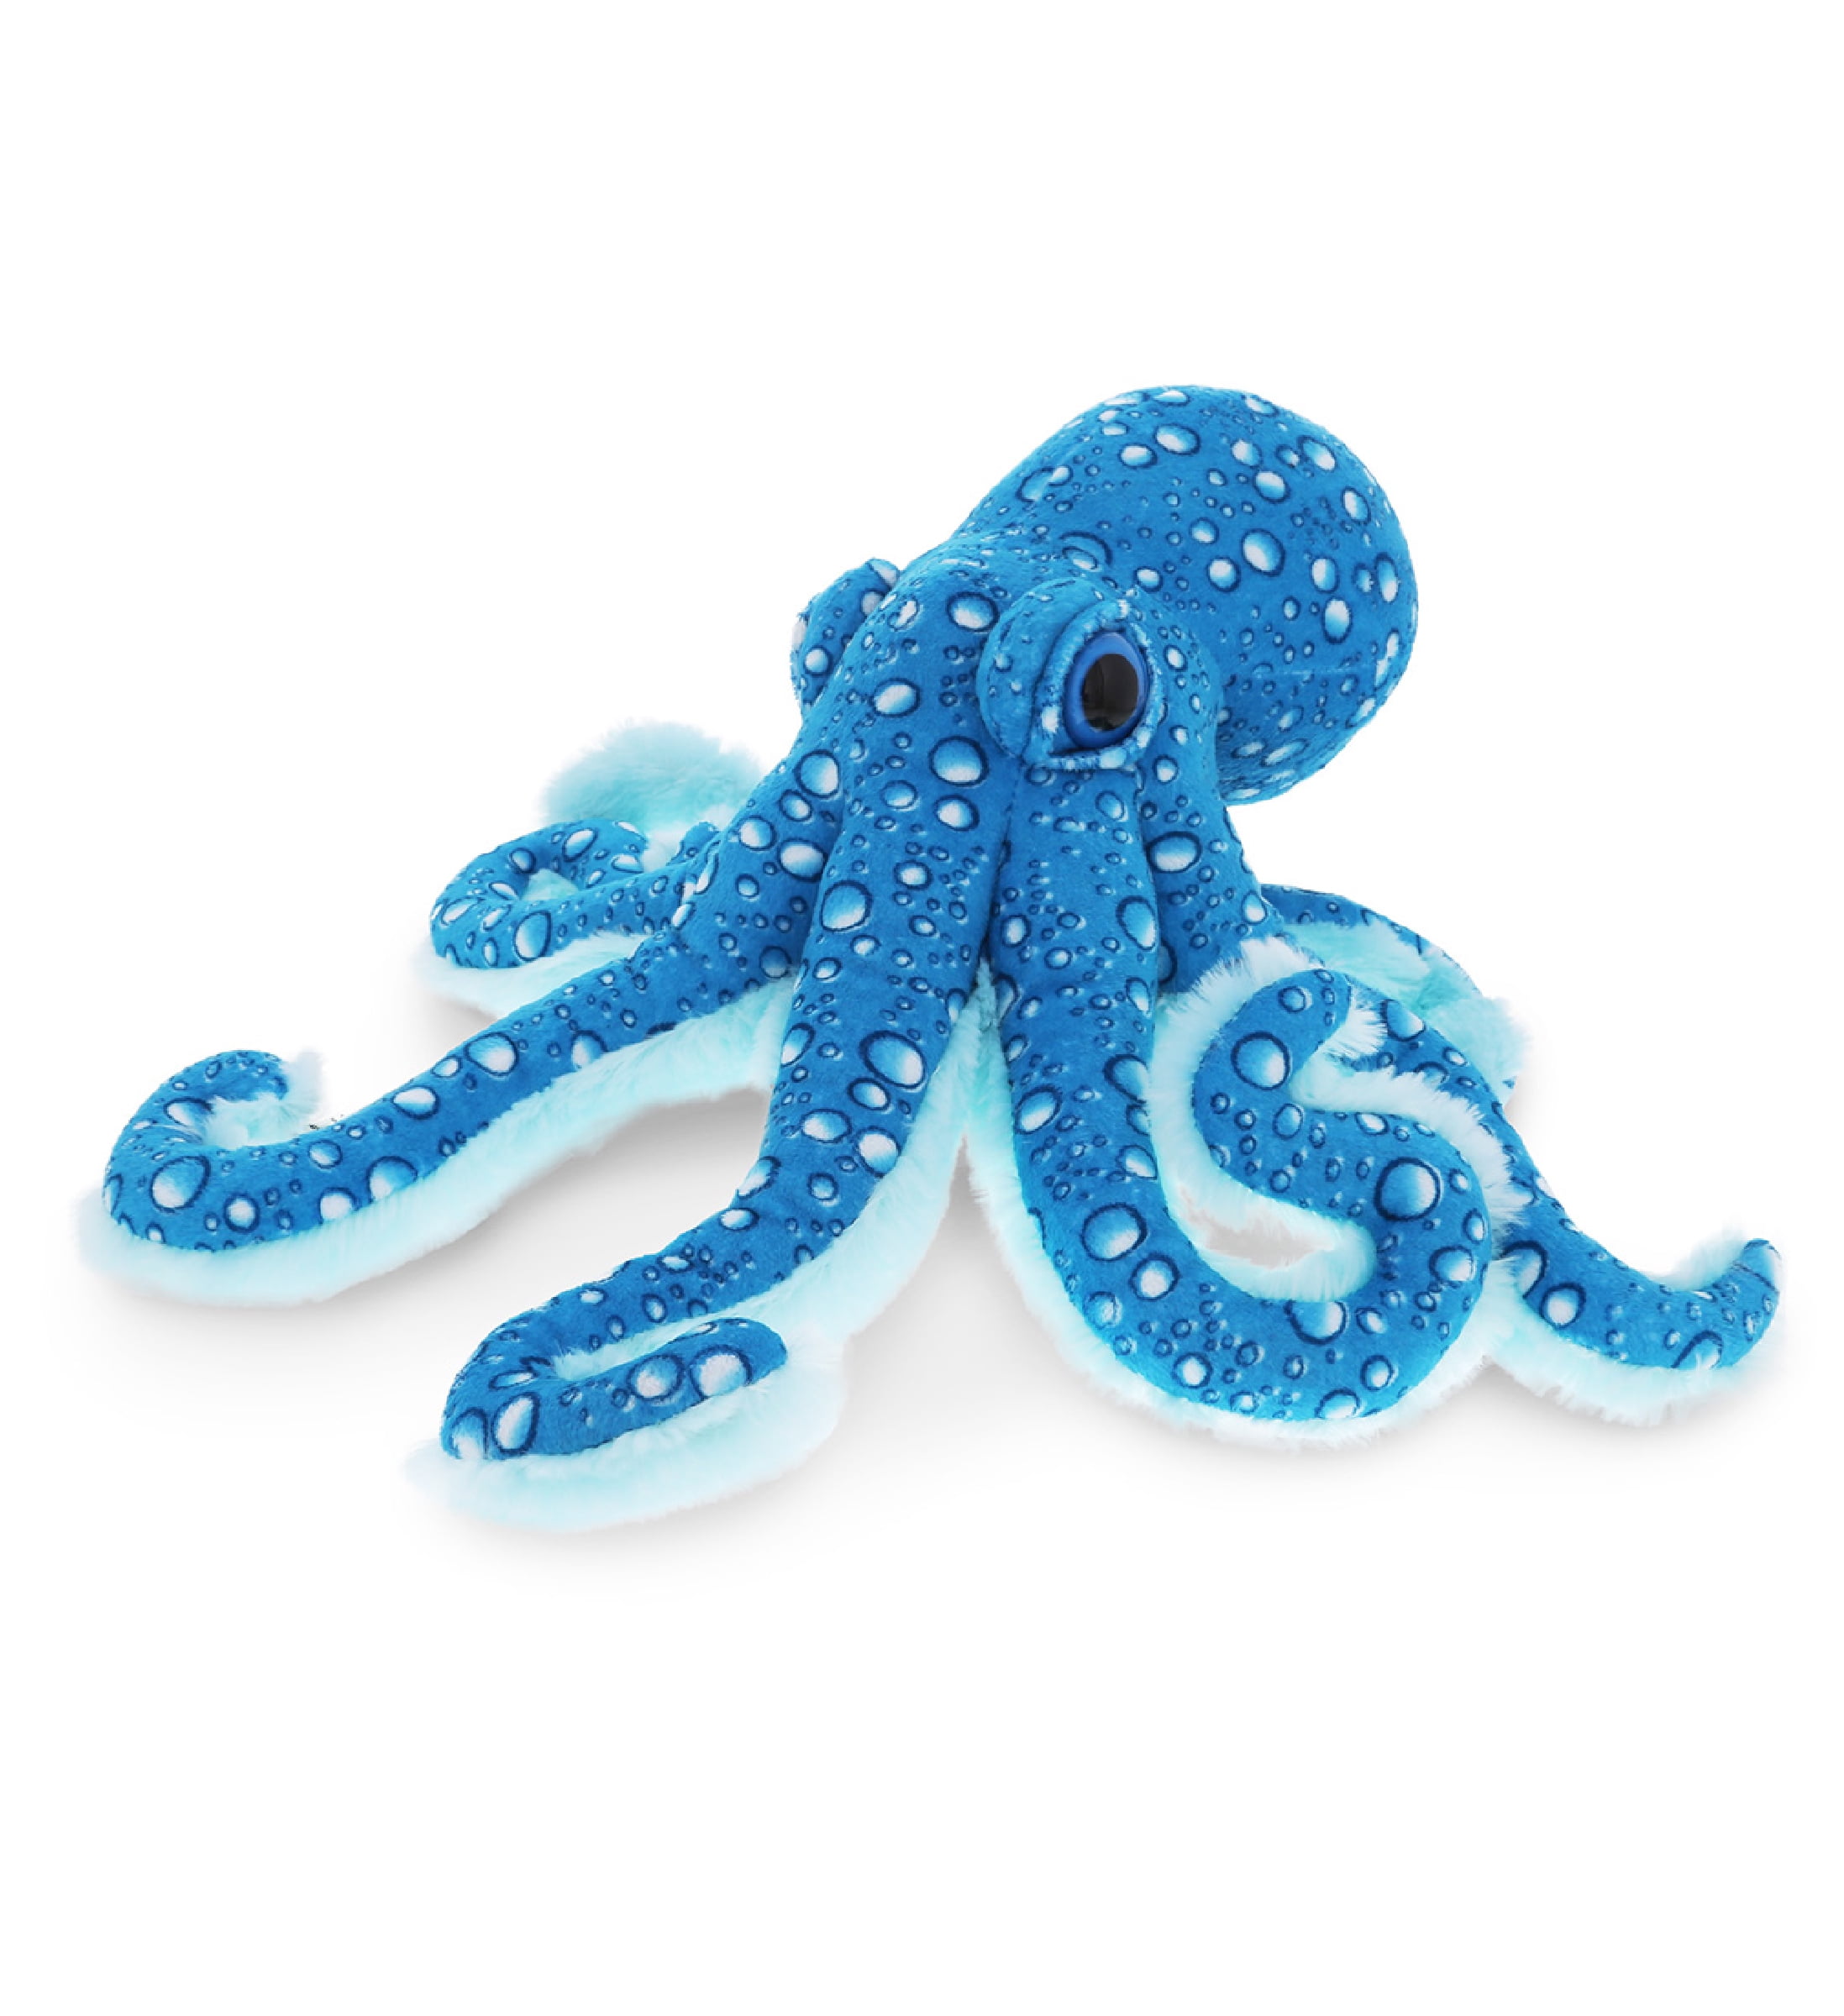 Blue Octopus Stuffed Toy